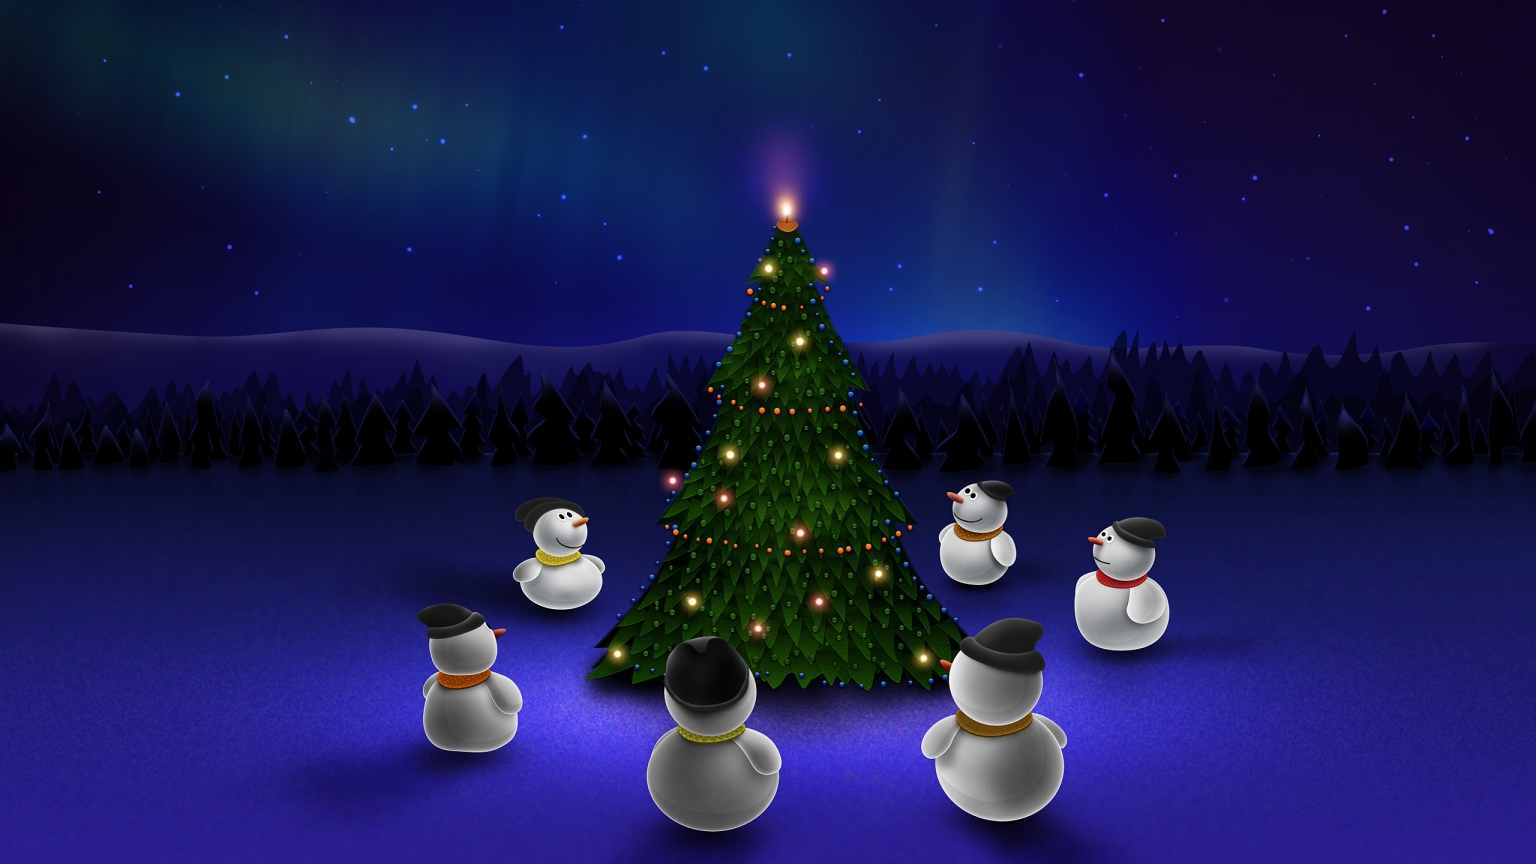 Snowman Around Christmas Tree for 1536 x 864 HDTV resolution